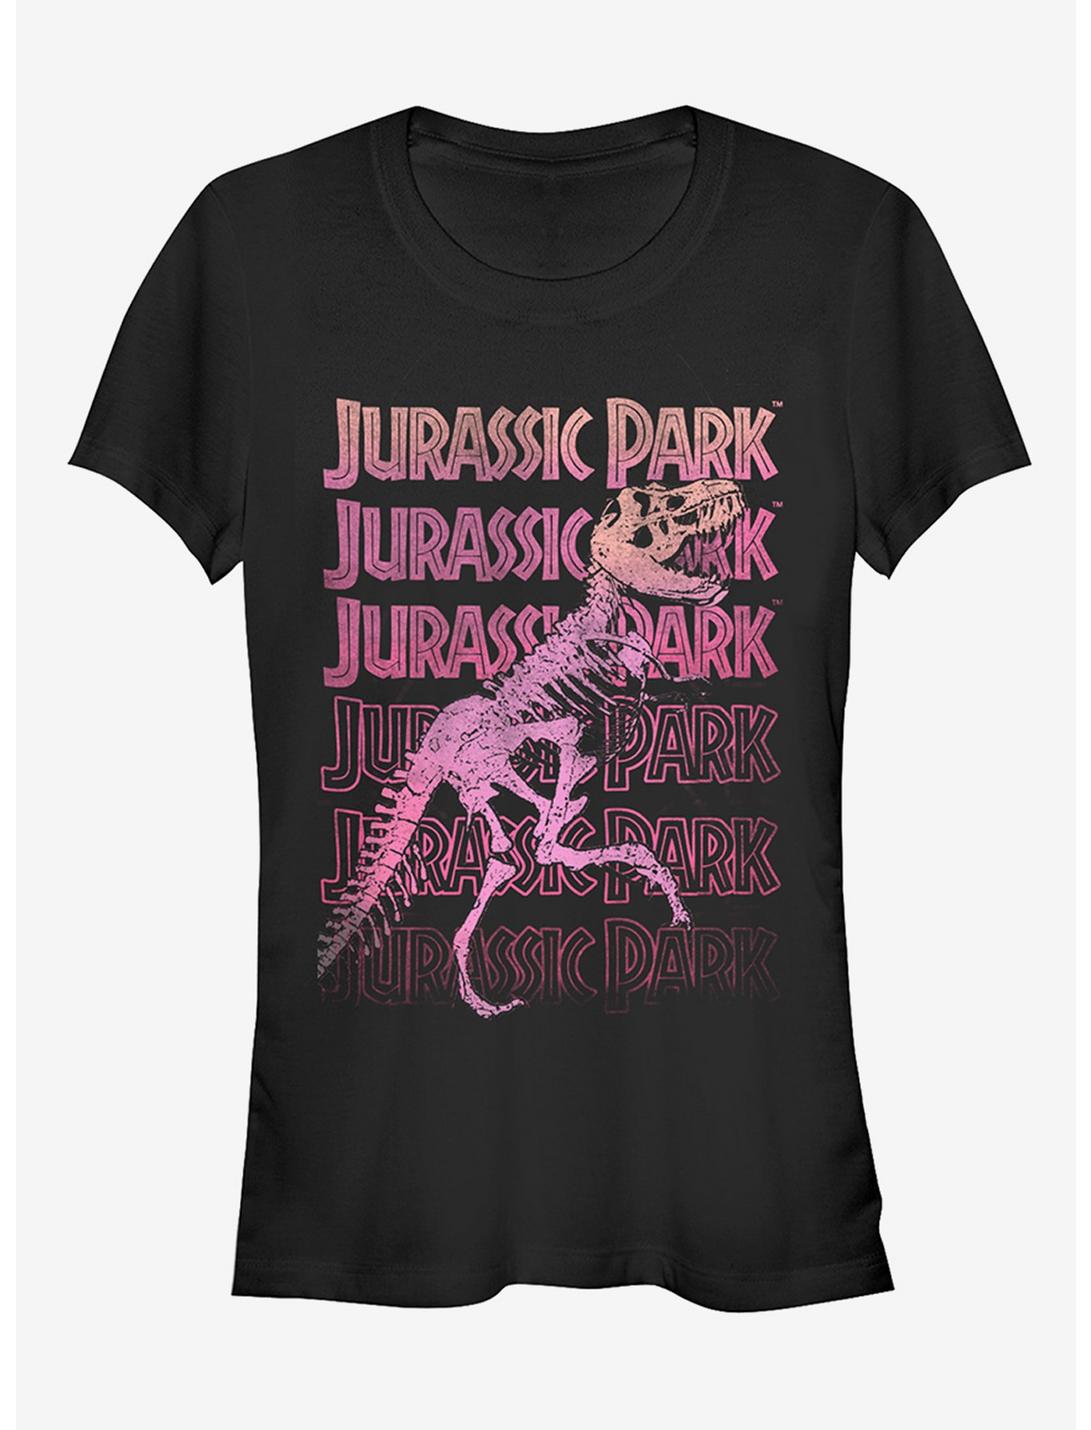 Jurassic Park T. Rex Skeleton Girls T-Shirt, BLACK, hi-res